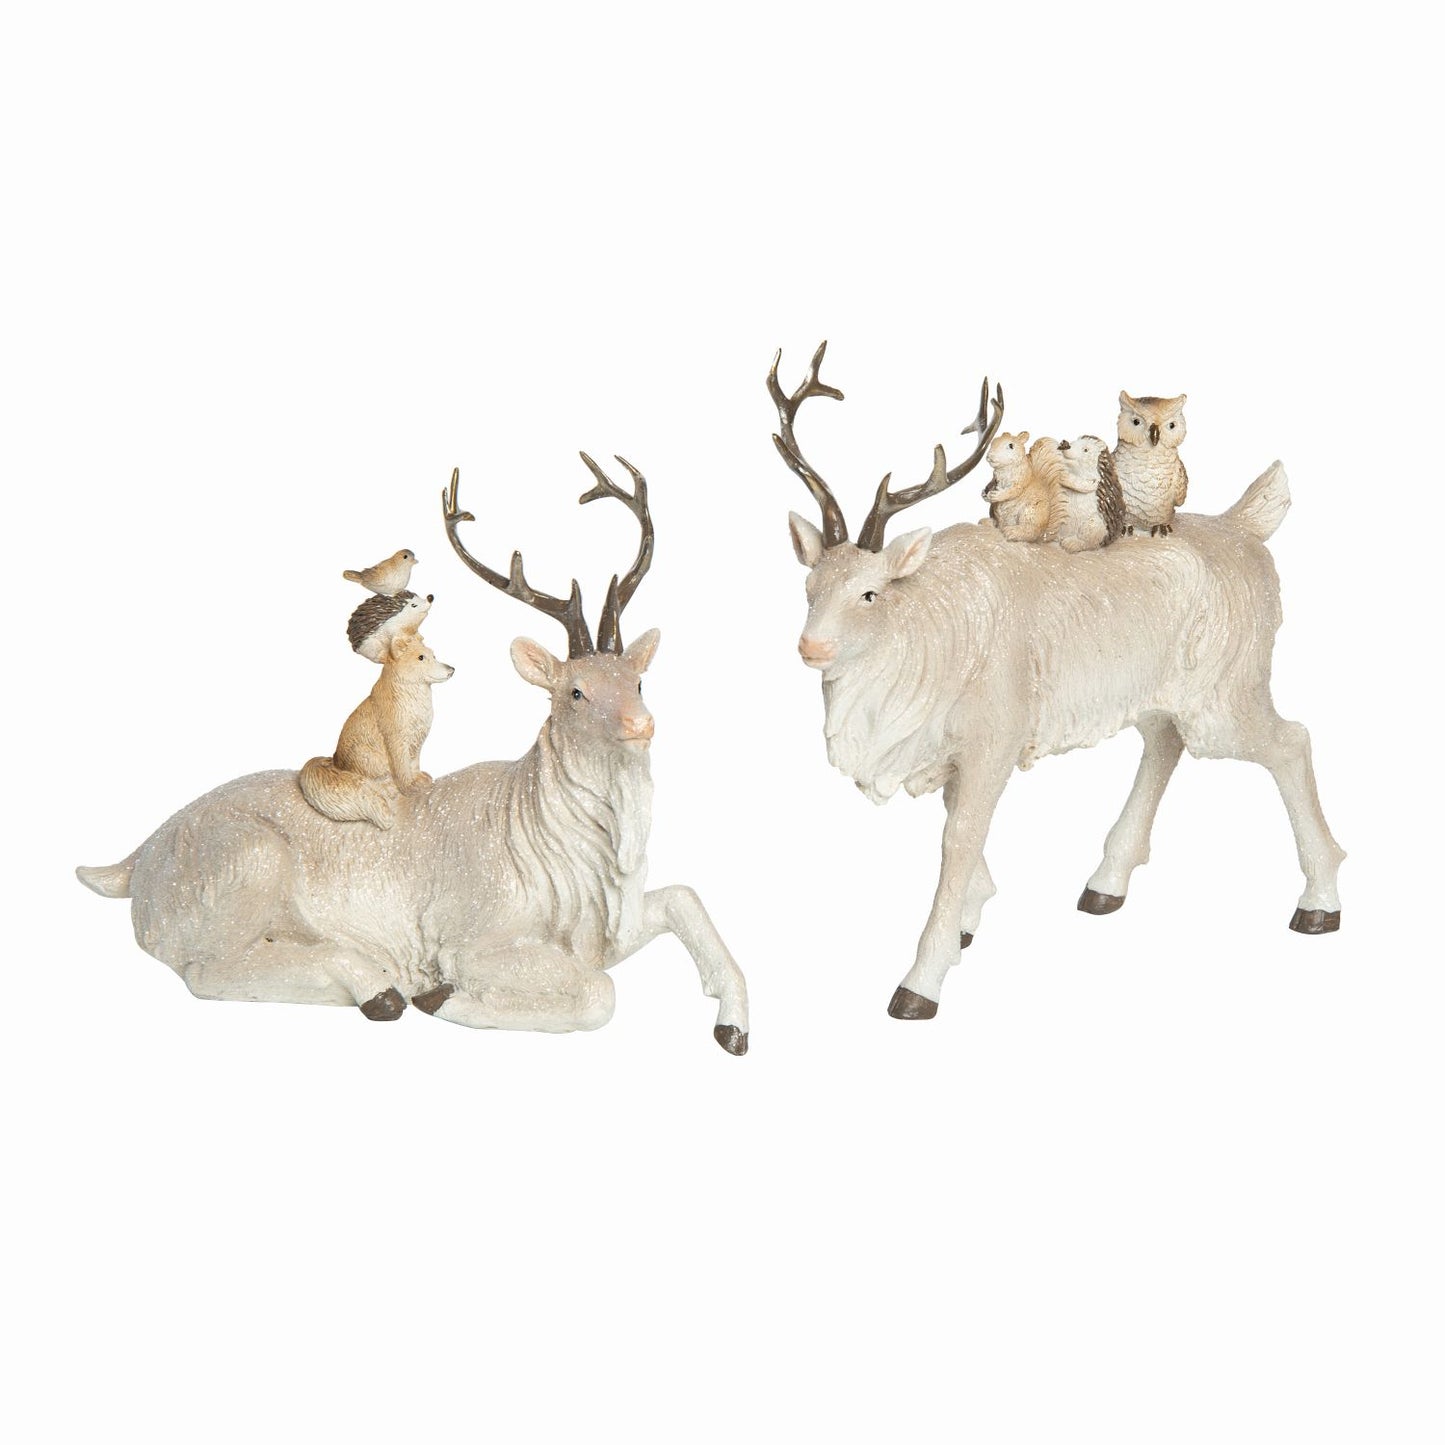 Transpac Resin Reindeer & Critter Figurine, Set Of 2, Assortment